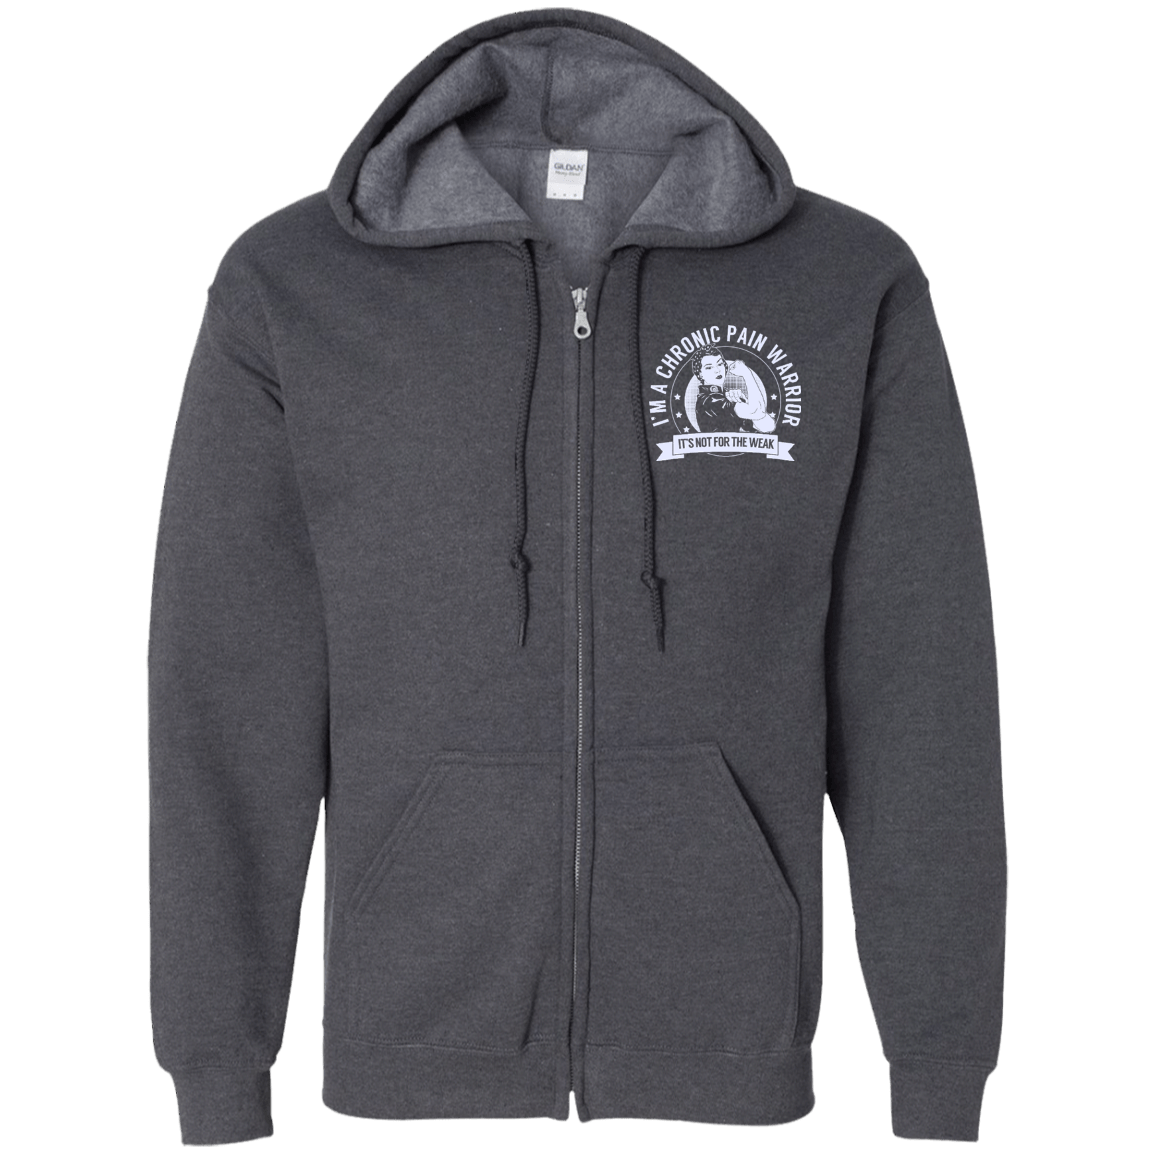 Chronic Pain Warrior NFTW Zip Up Hooded Sweatshirt - The Unchargeables